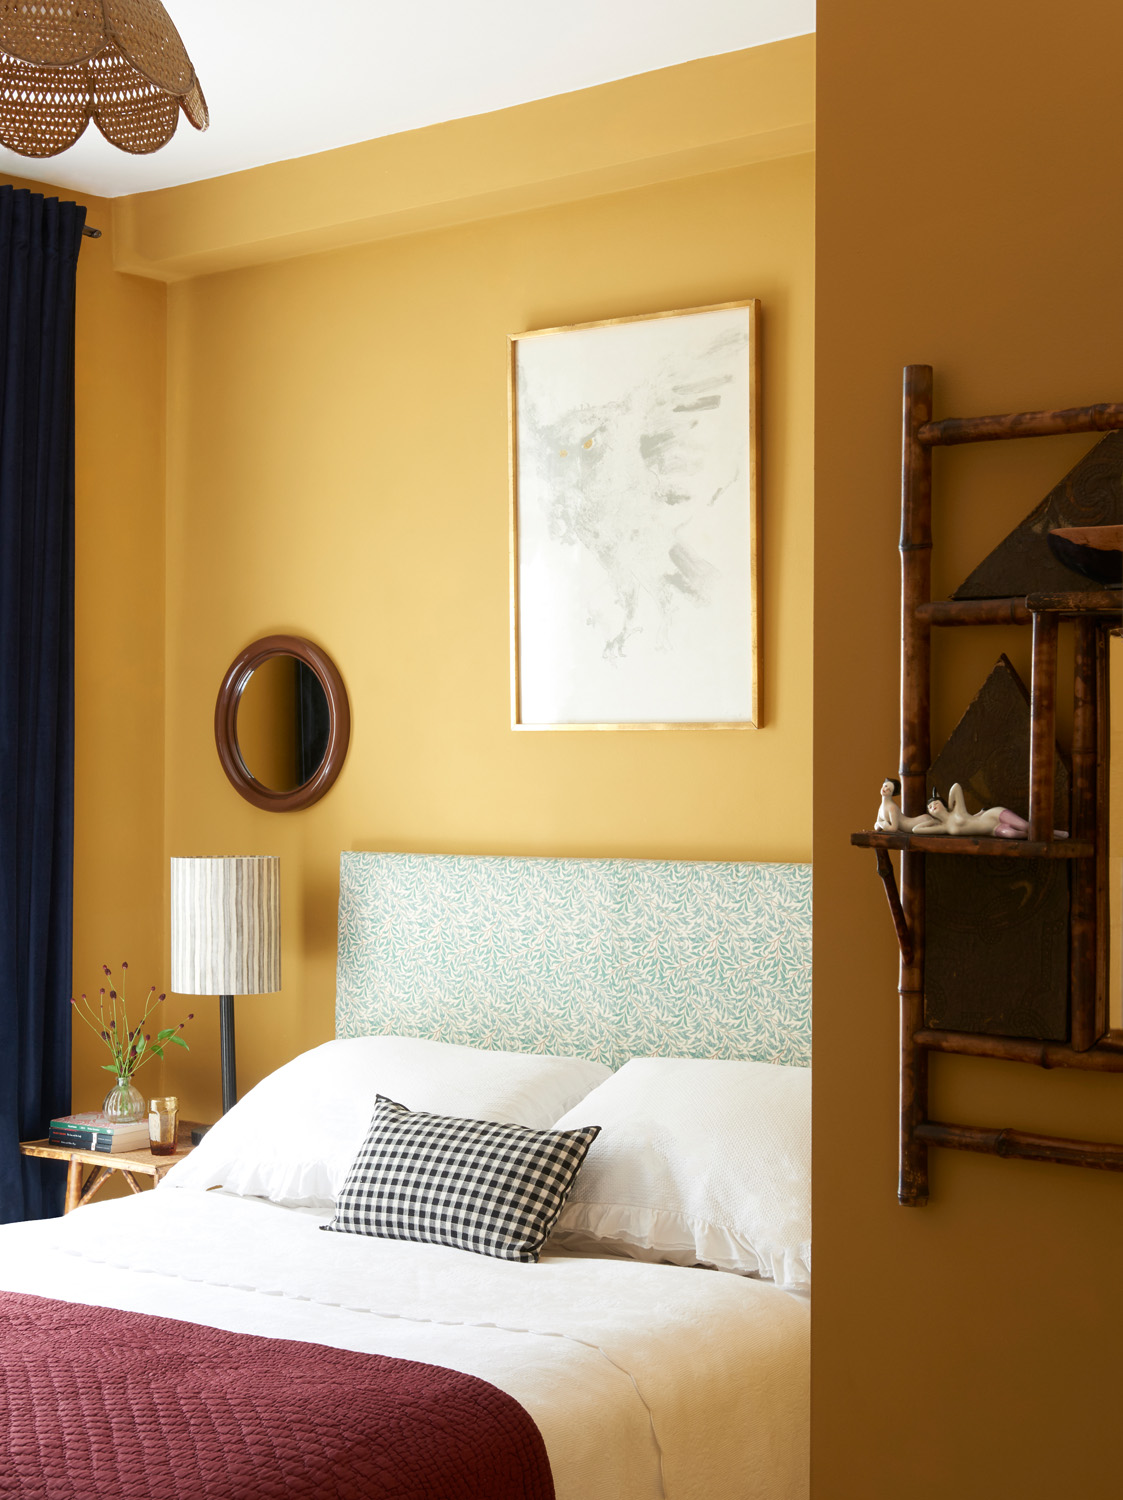 Bedroom by Sascal - contemporary interior design studio in London